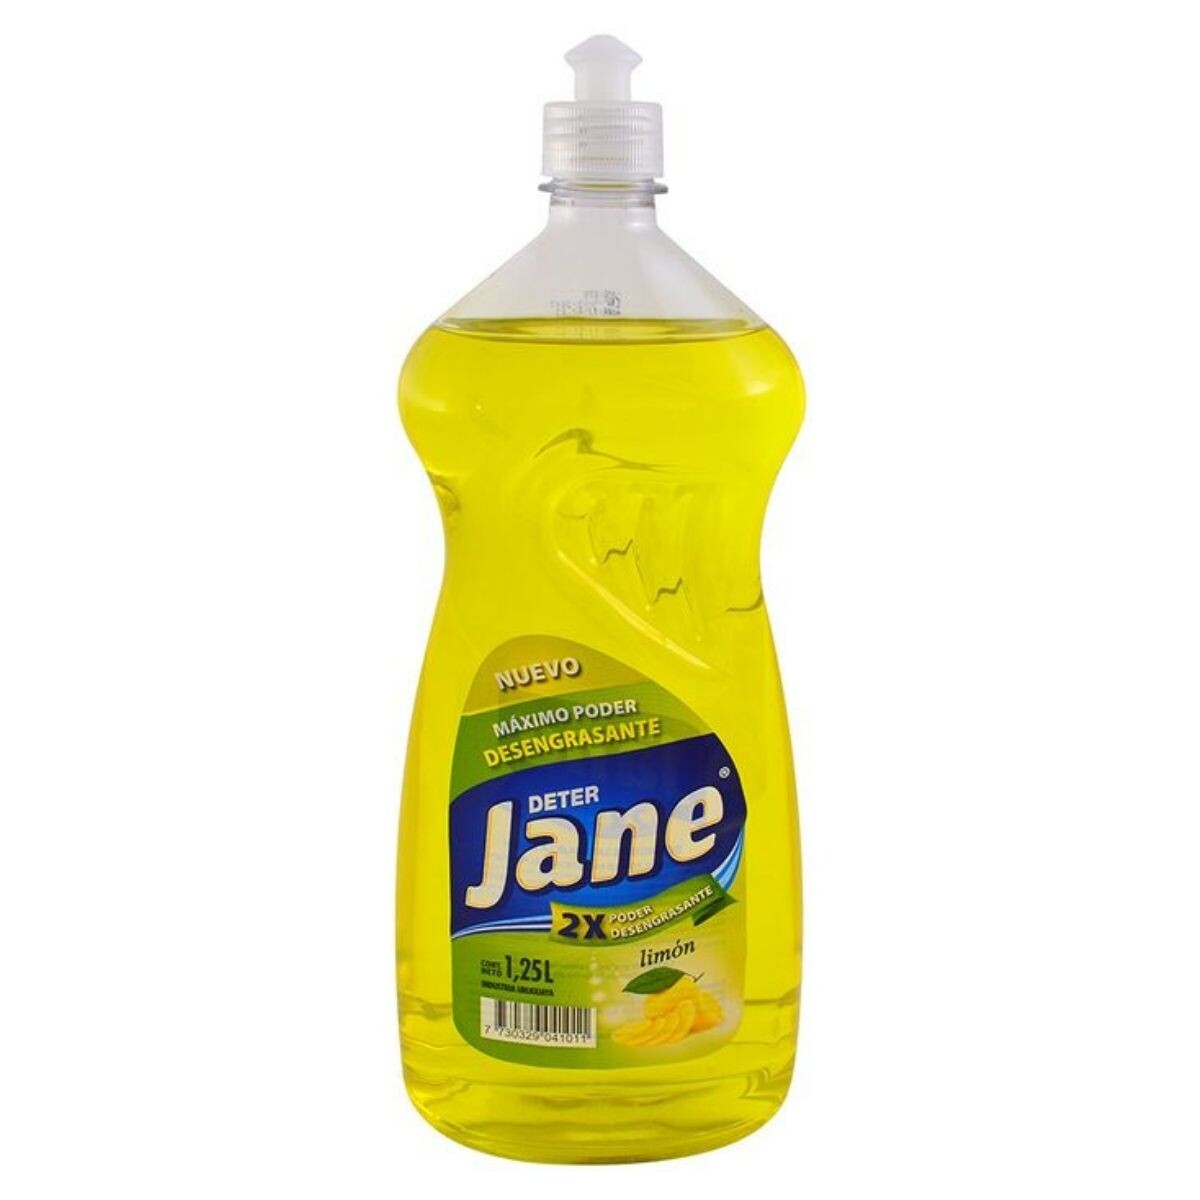 Detergente Líquido Deter Jane Limón - 1.25 LT 